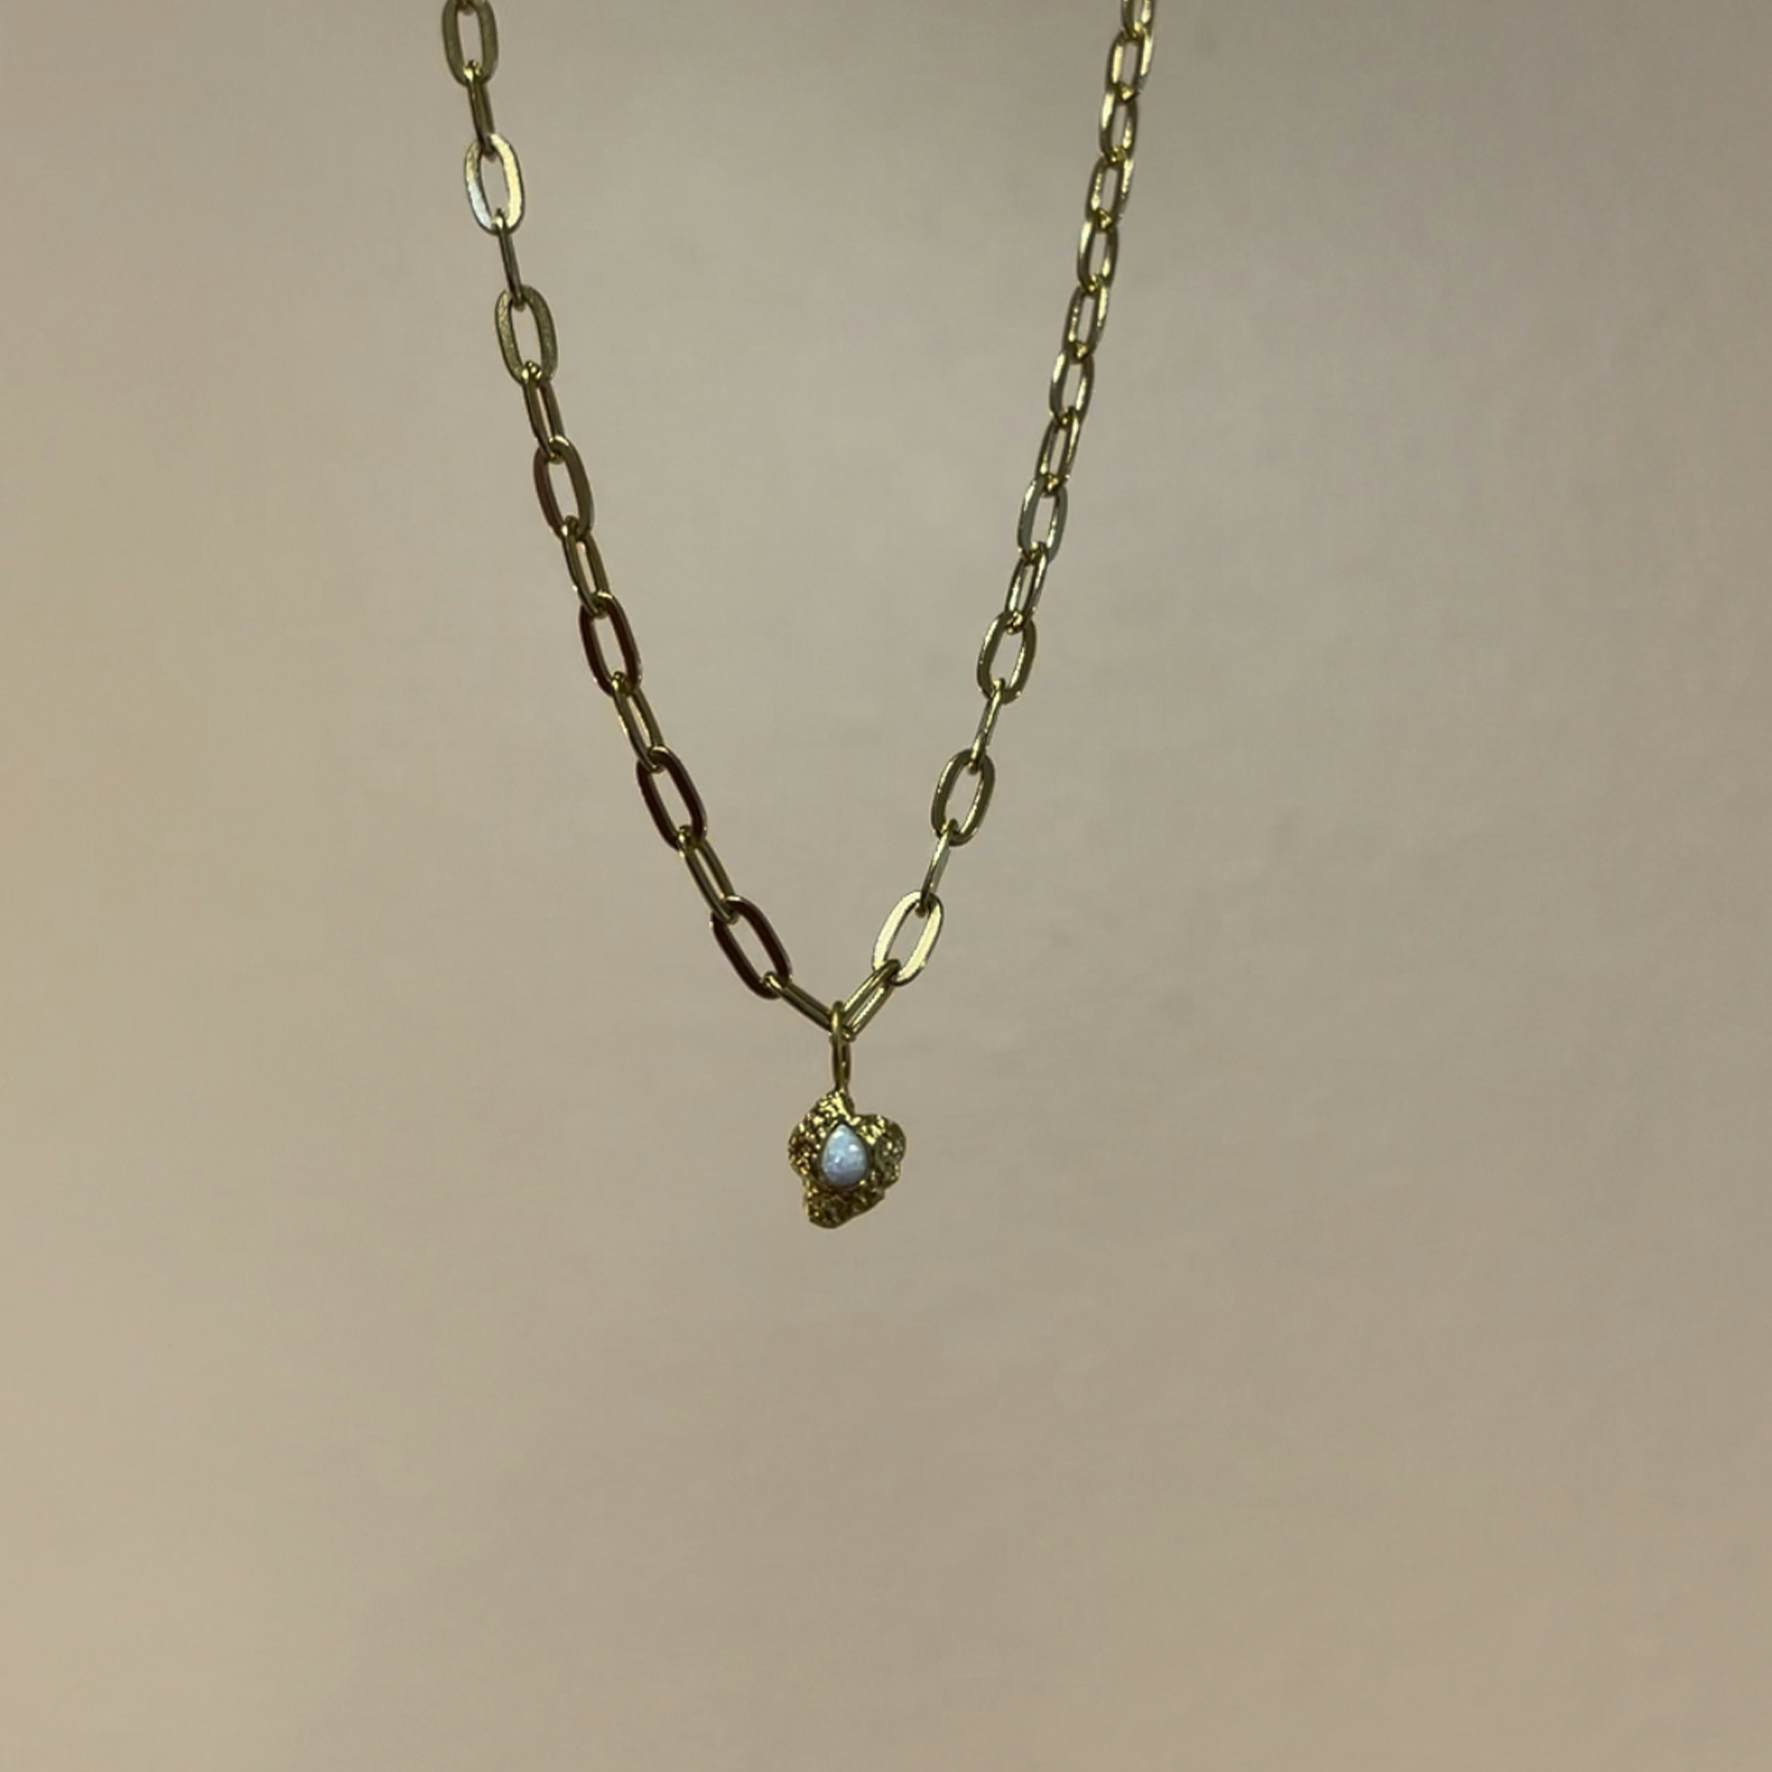 Ocean Glimpse Pendant With Opal fra STINE A Jewelry i Forgylt-Sølv Sterling 925